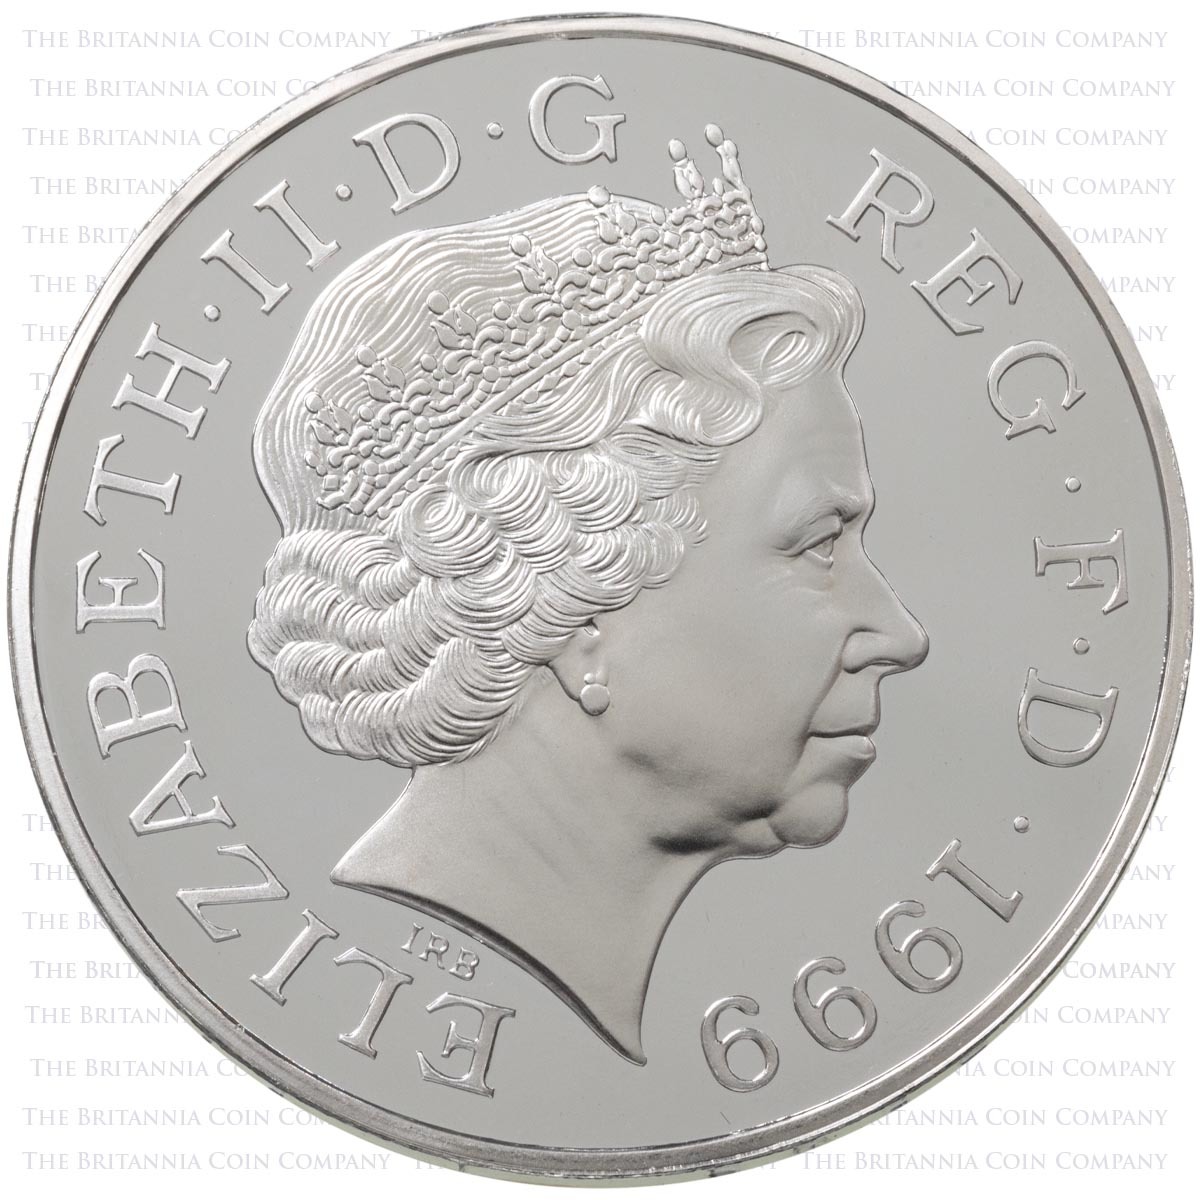 UKM99SP 1999 Millennium Five Pound Silver Proof Coin Obverse